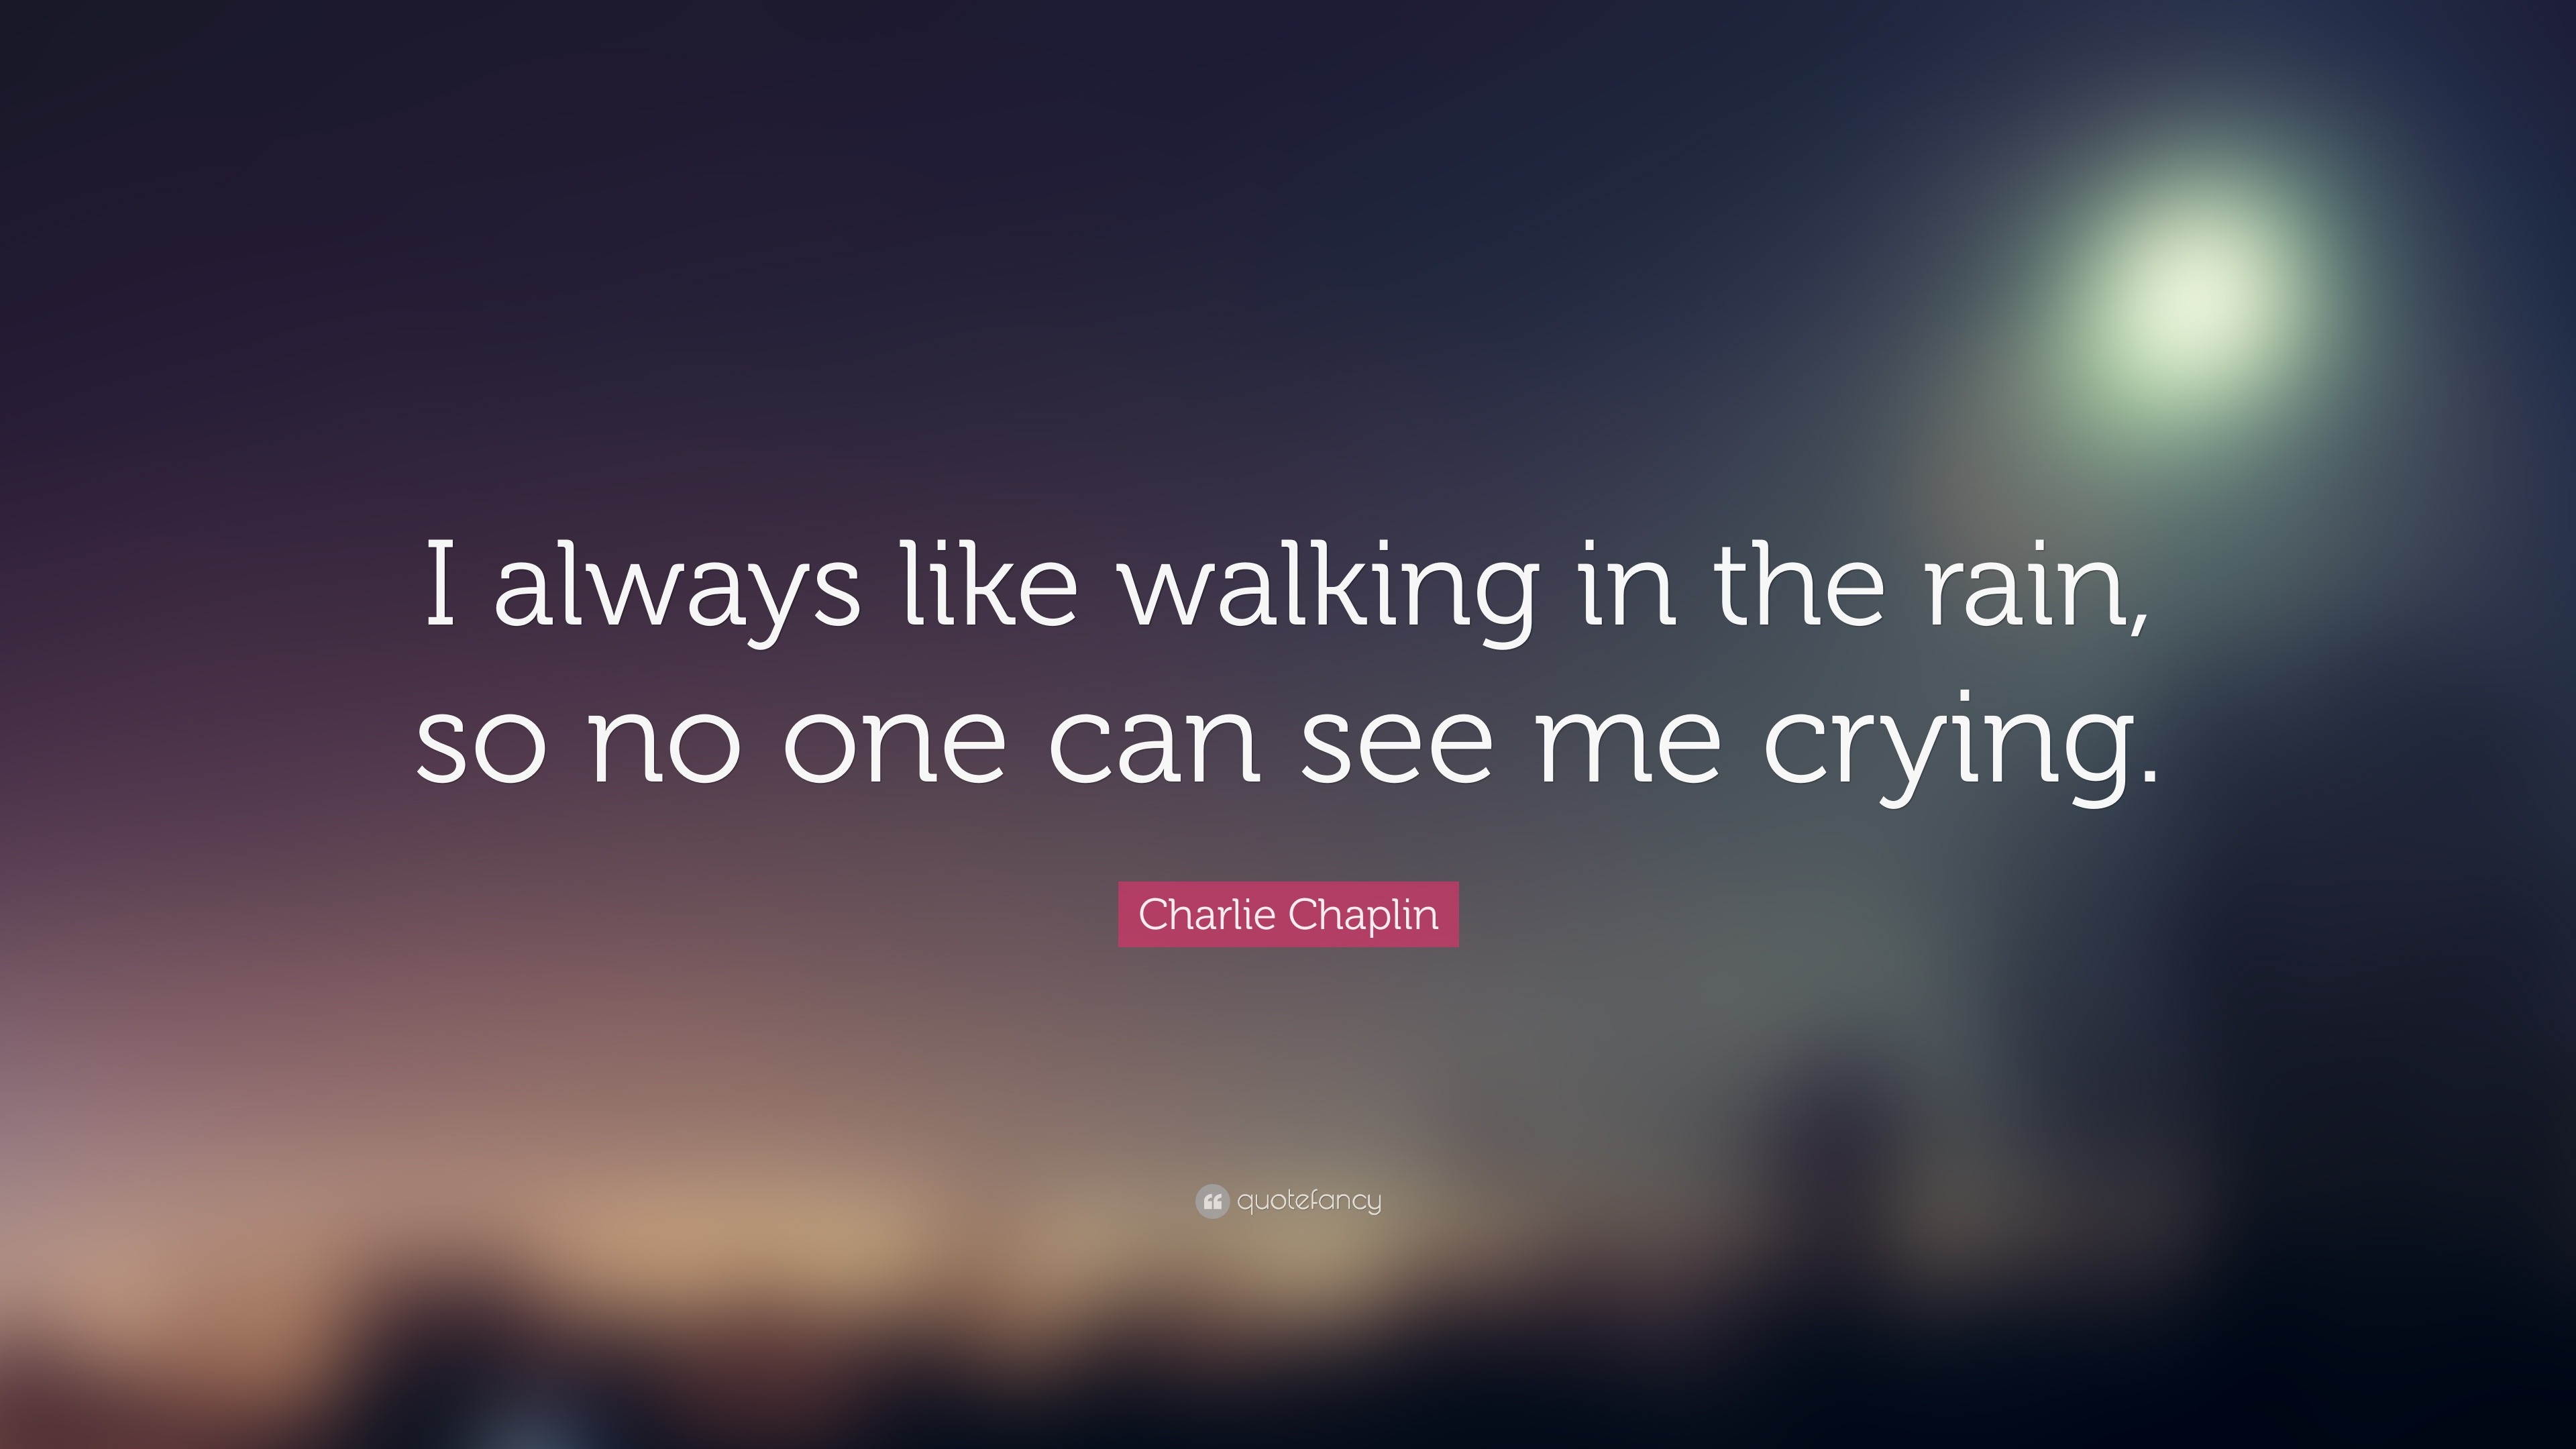 22675 Charlie Chaplin Quote I always like walking in the rain so no one